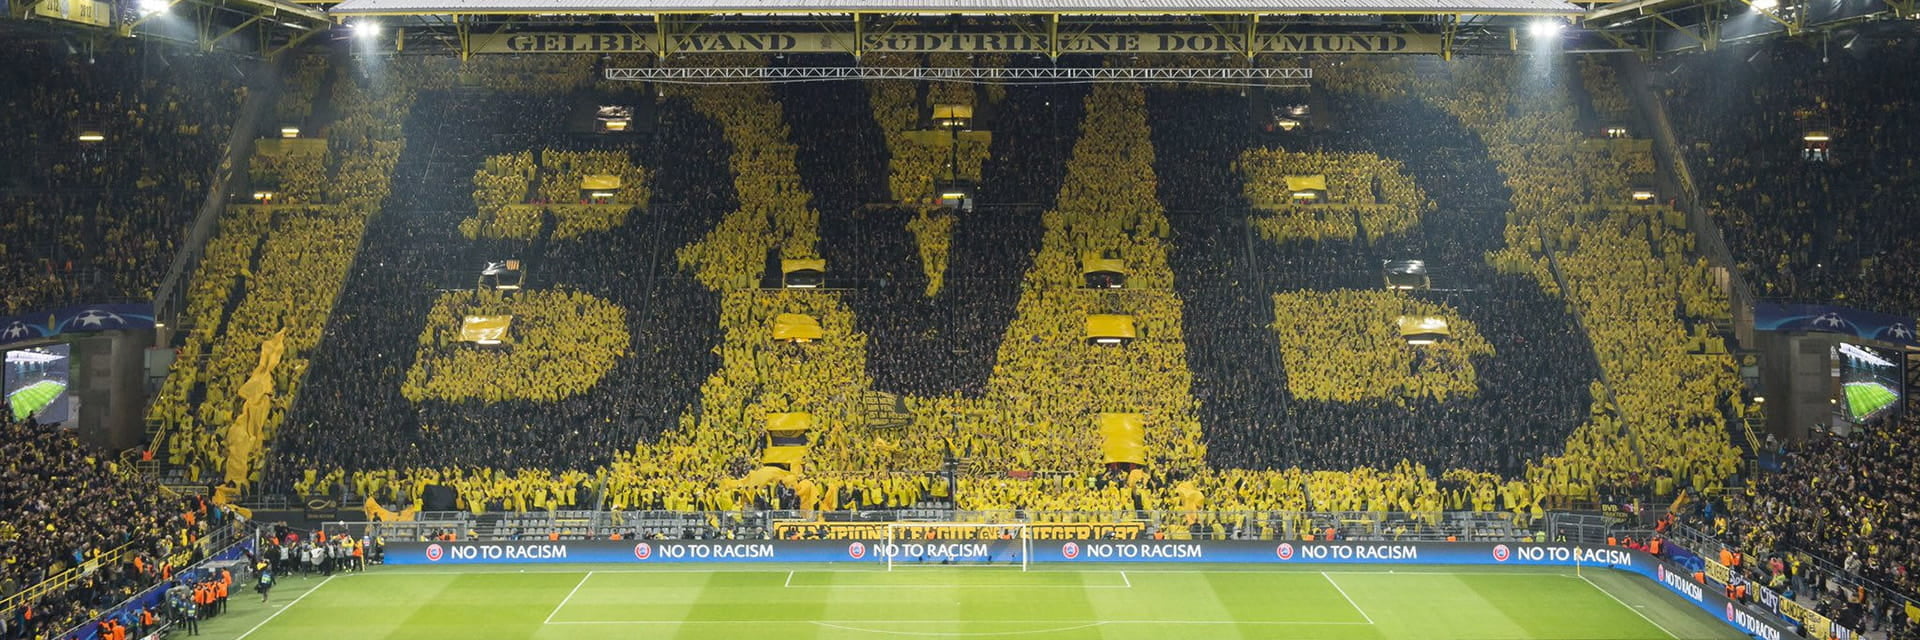 Borussia Dortmund - VfB Stuttgart, 6 oktoberden 15:30